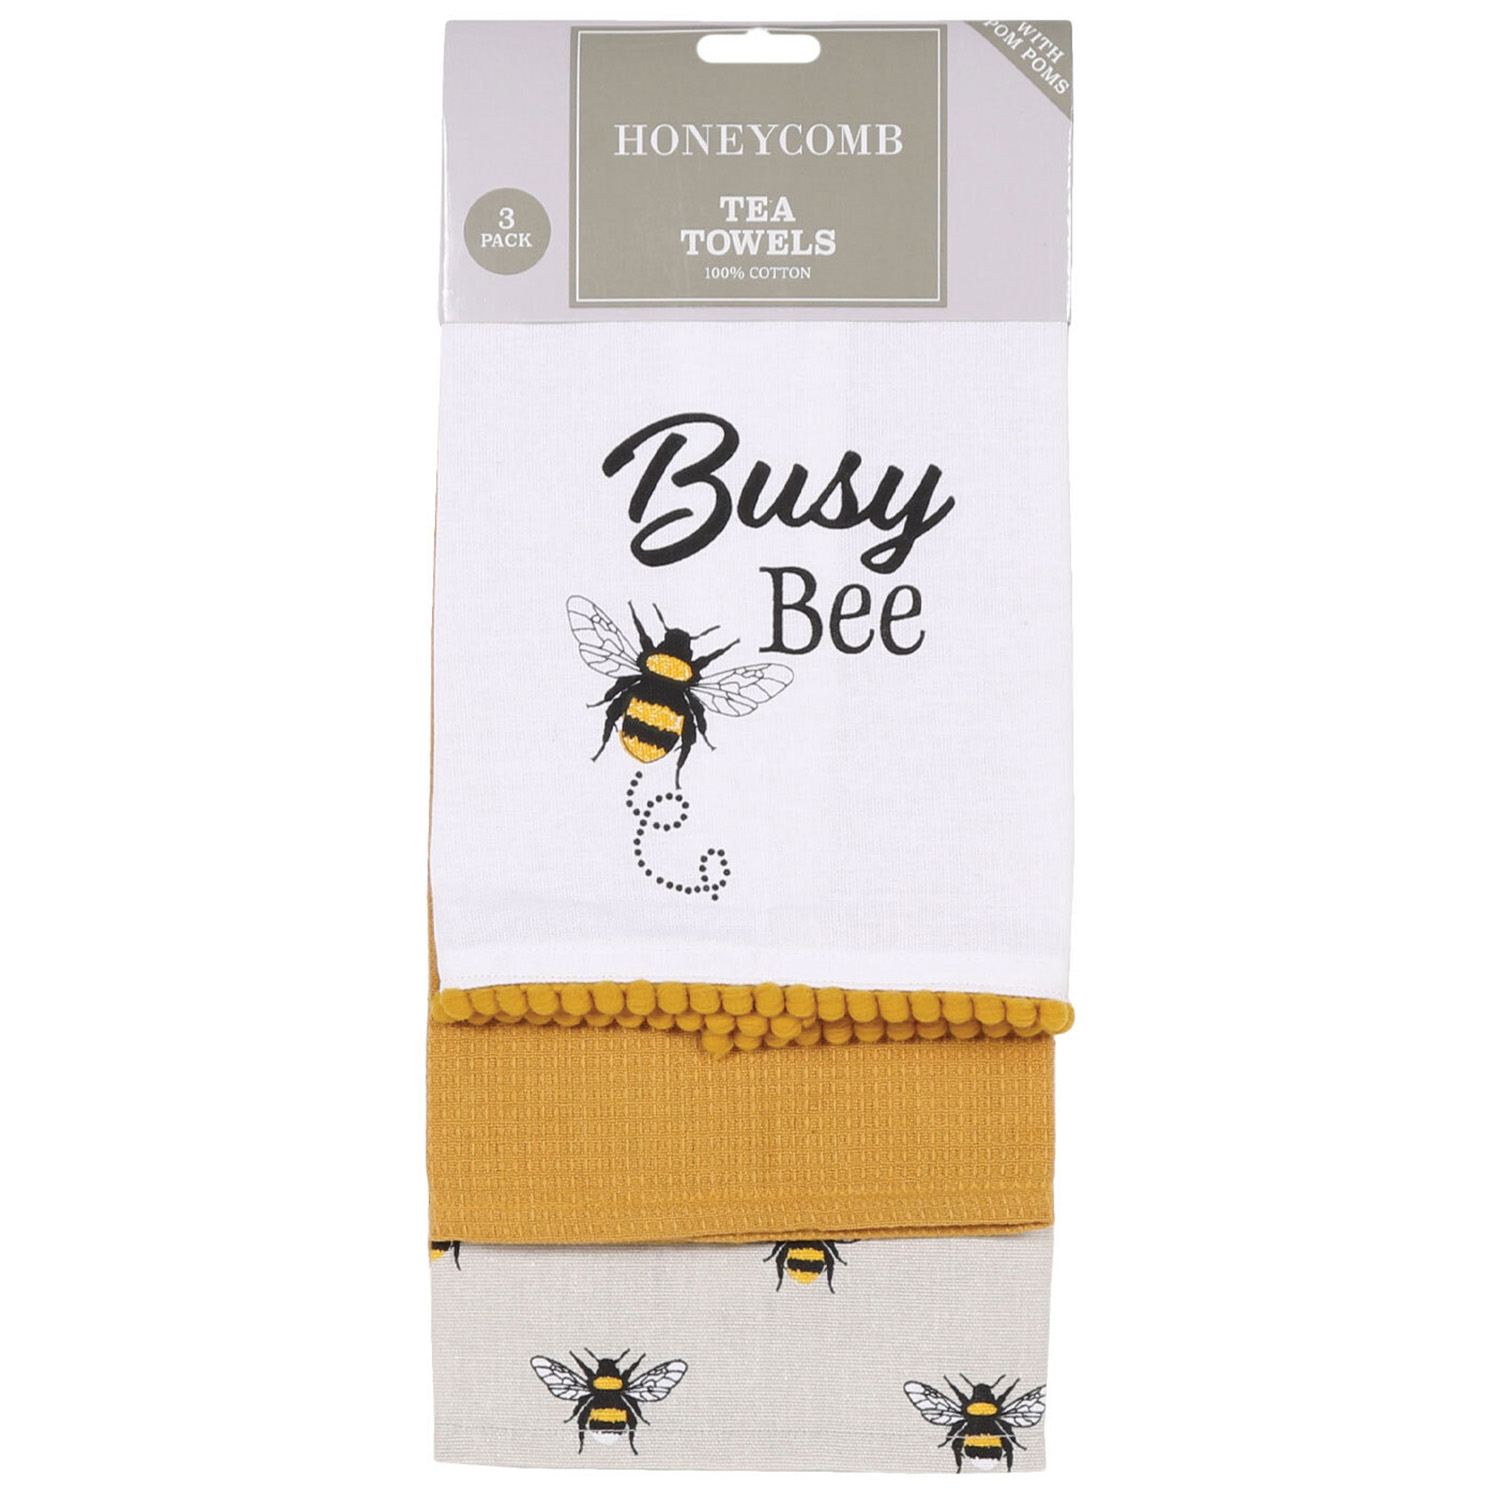 Honeycomb Tea Towels 3 Pack Image